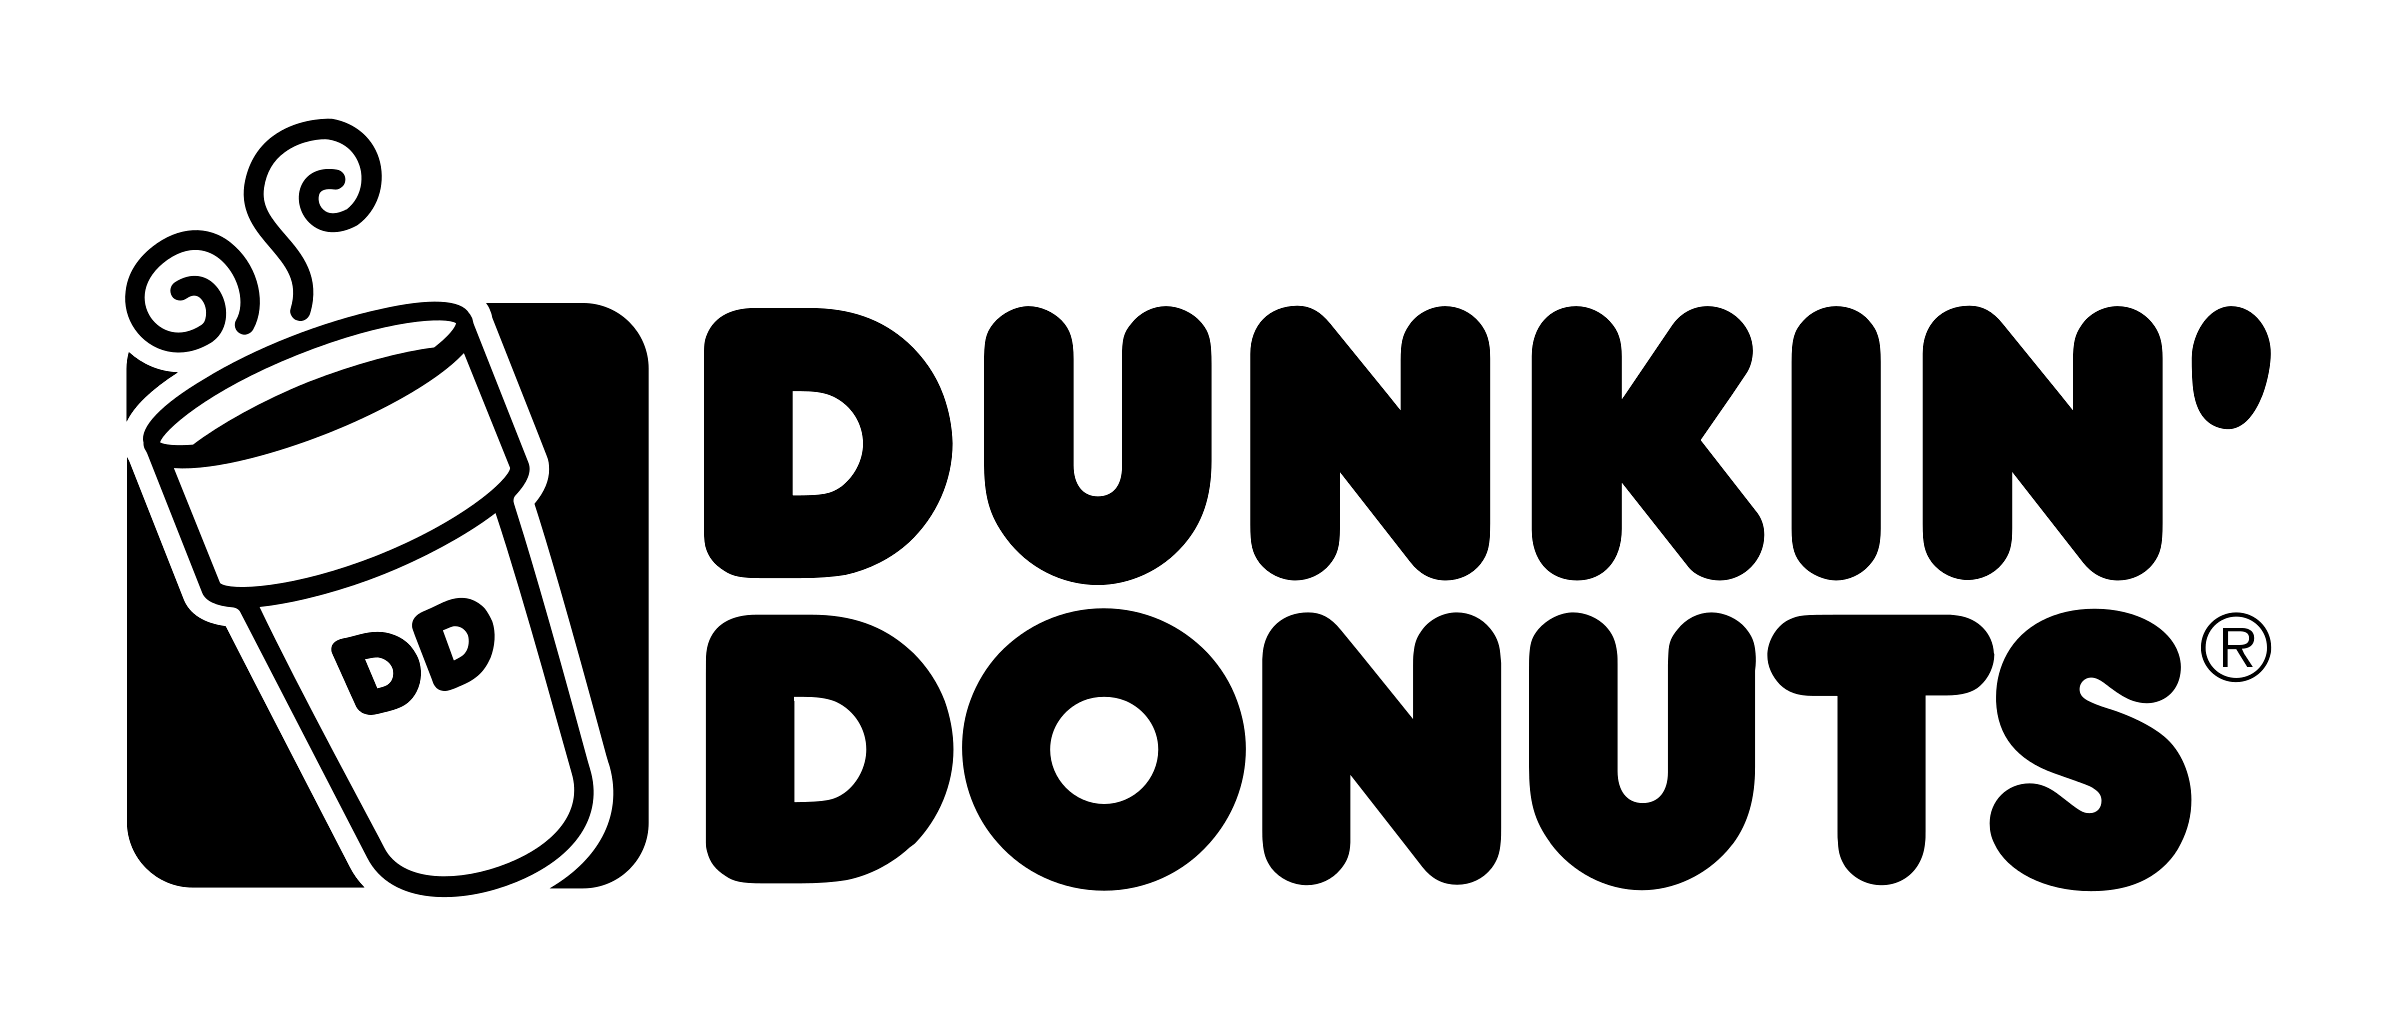 Dunkin' Donuts Logo - Dunkin Donuts Logo PNG Transparent & SVG Vector - Freebie Supply